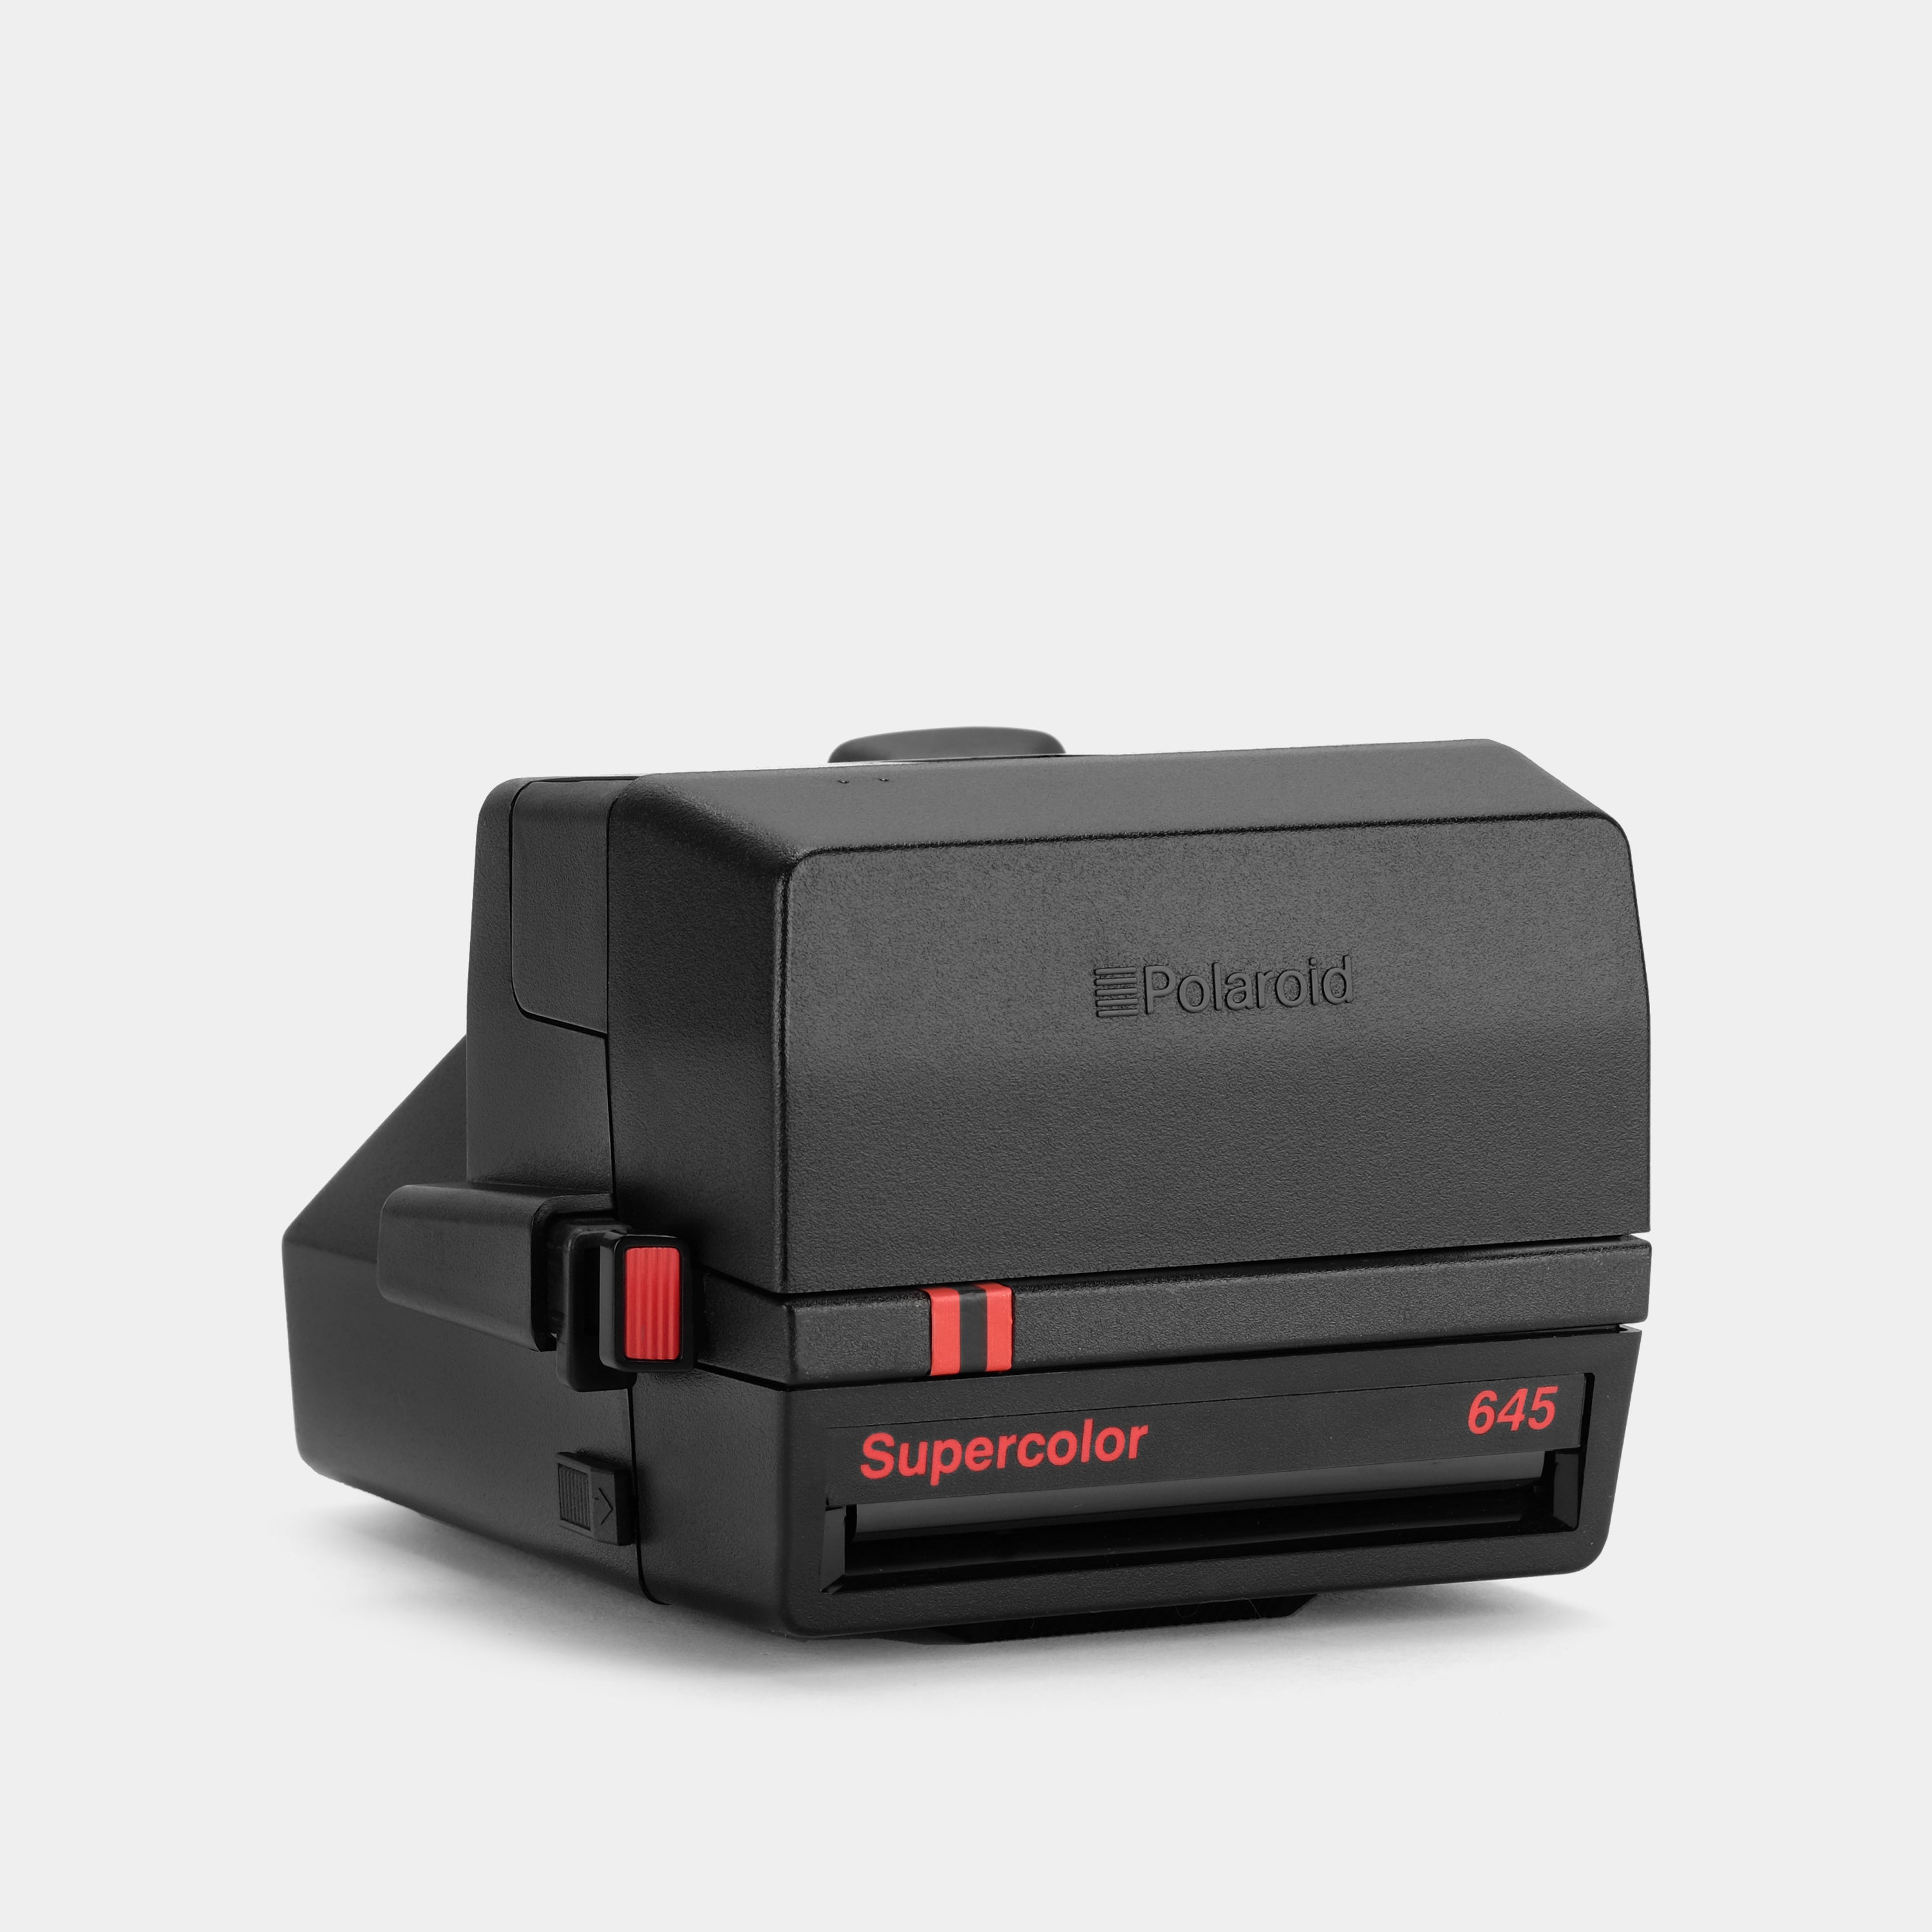 Polaroid 600 Supercolor 645 Instant Film Camera